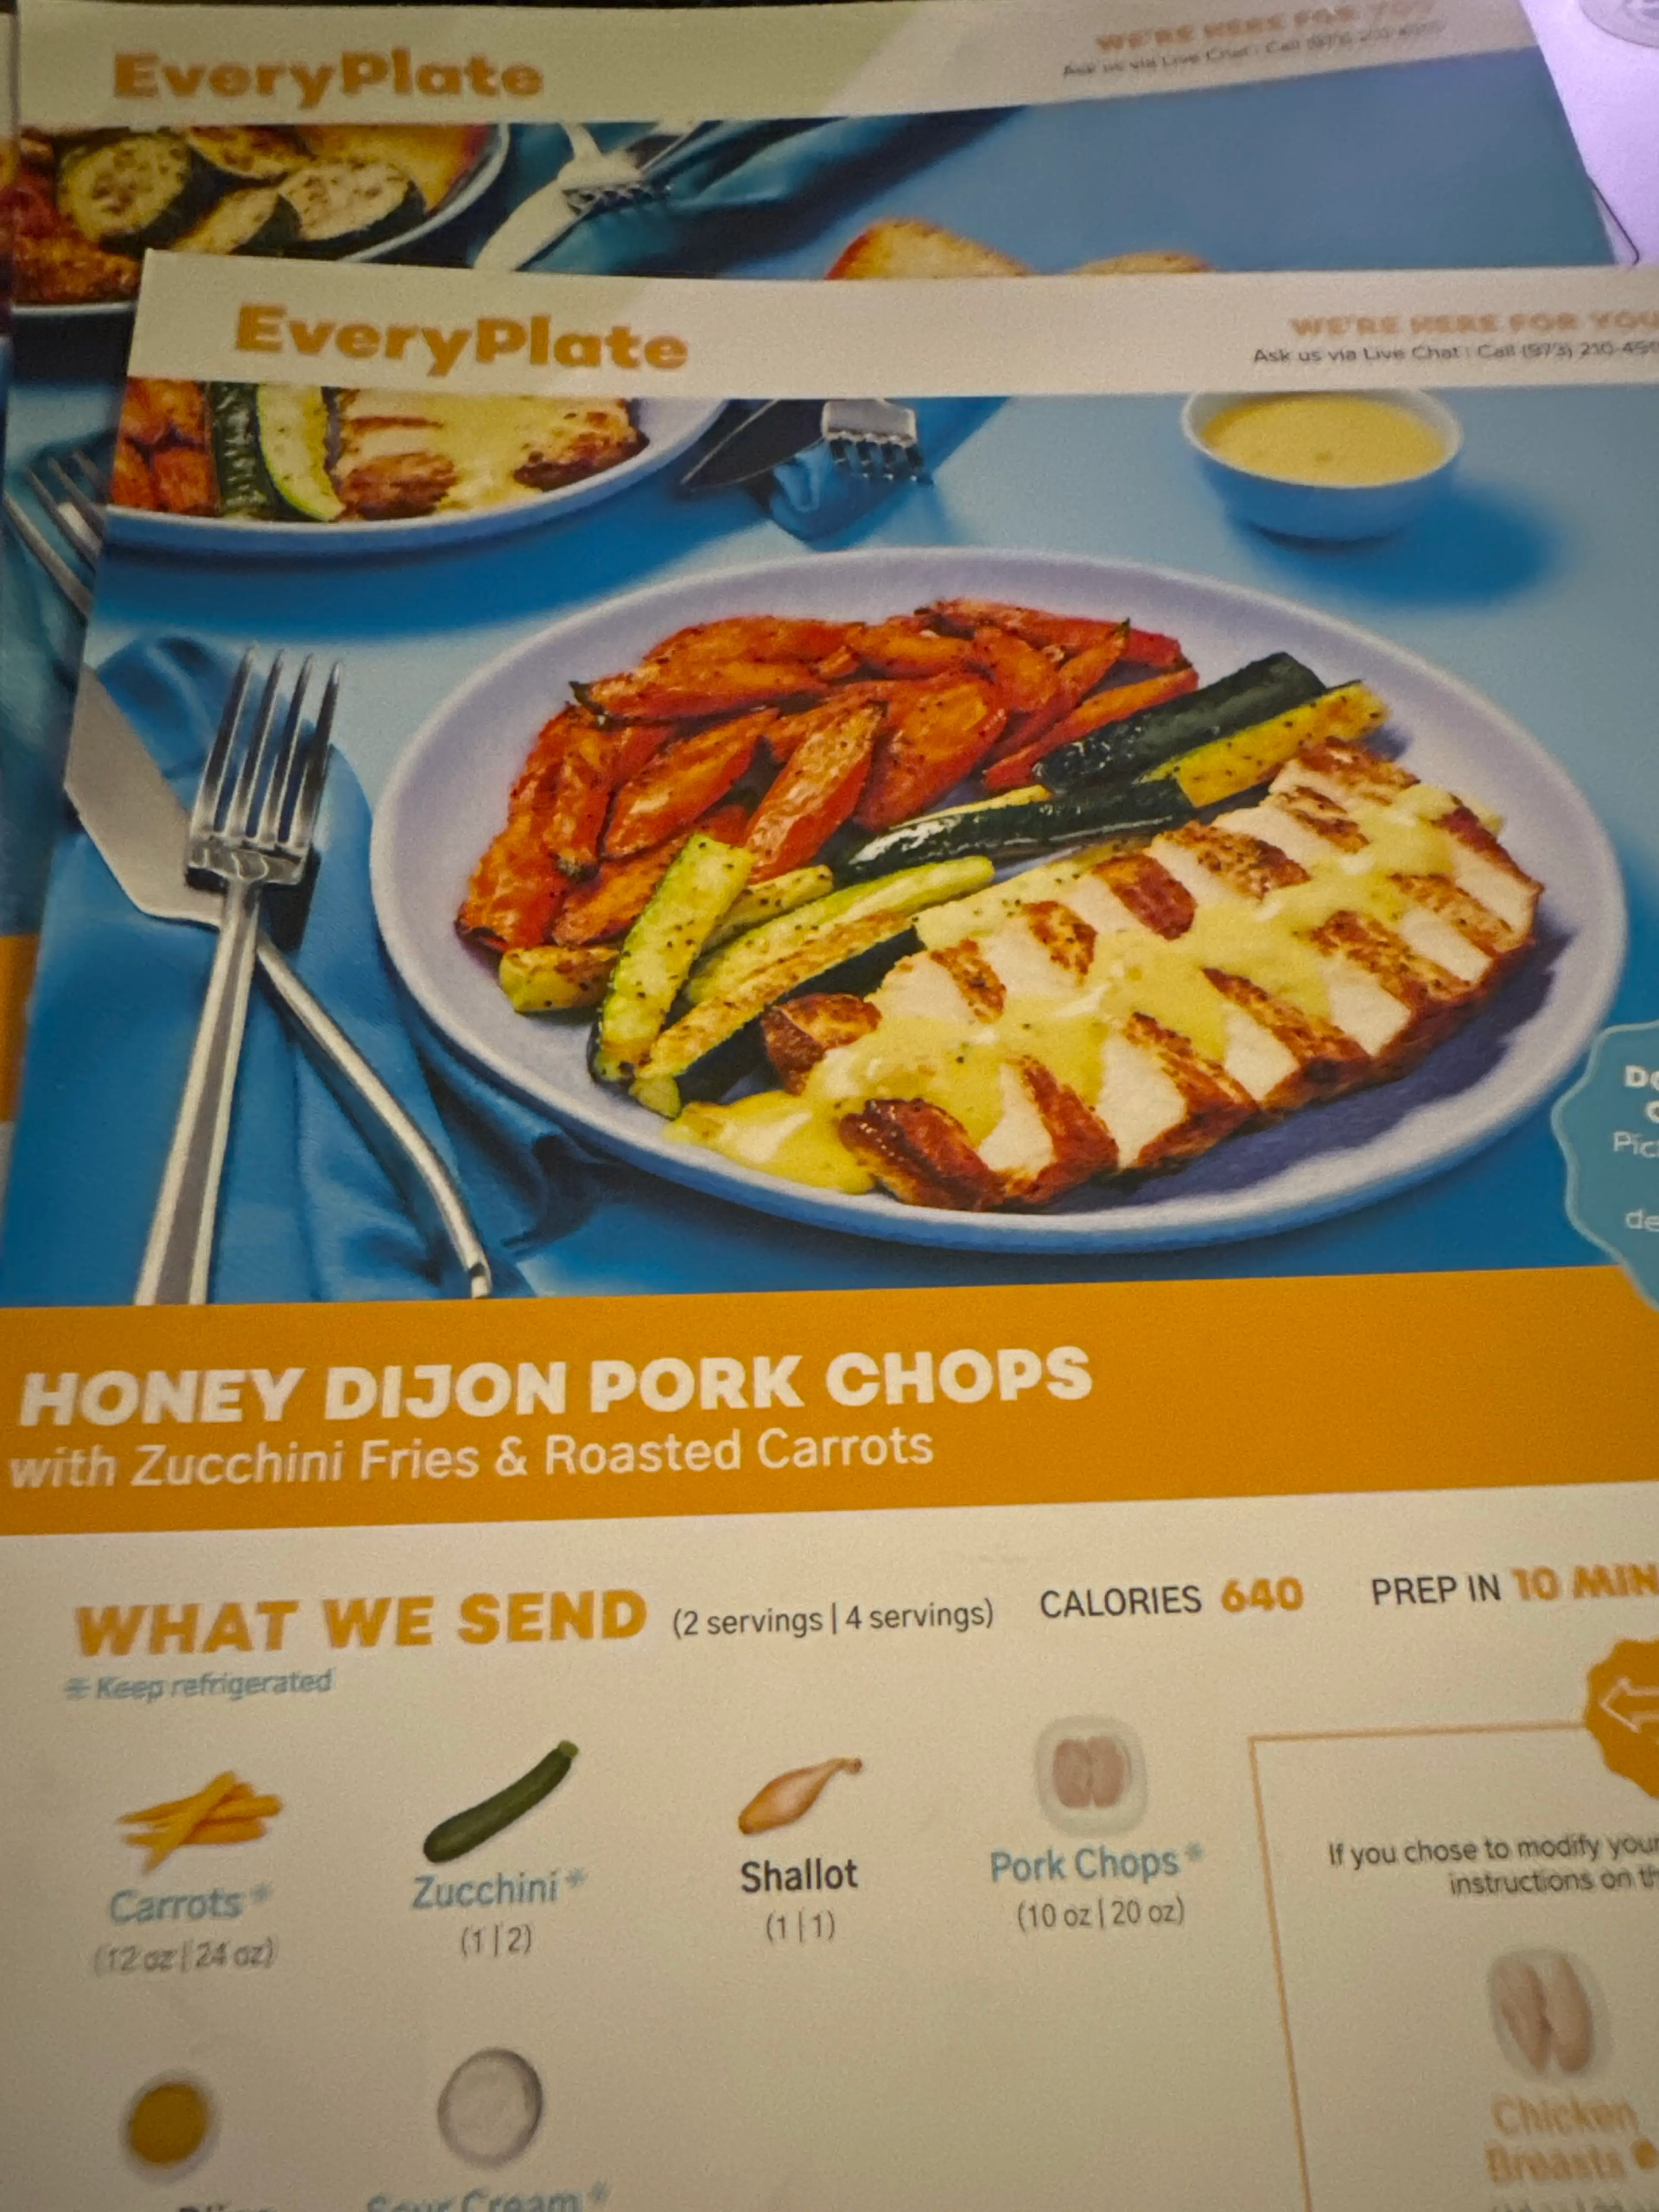 HONEY DIJON PORK CHOPS with Zucchini Fries & Roasted Carrots